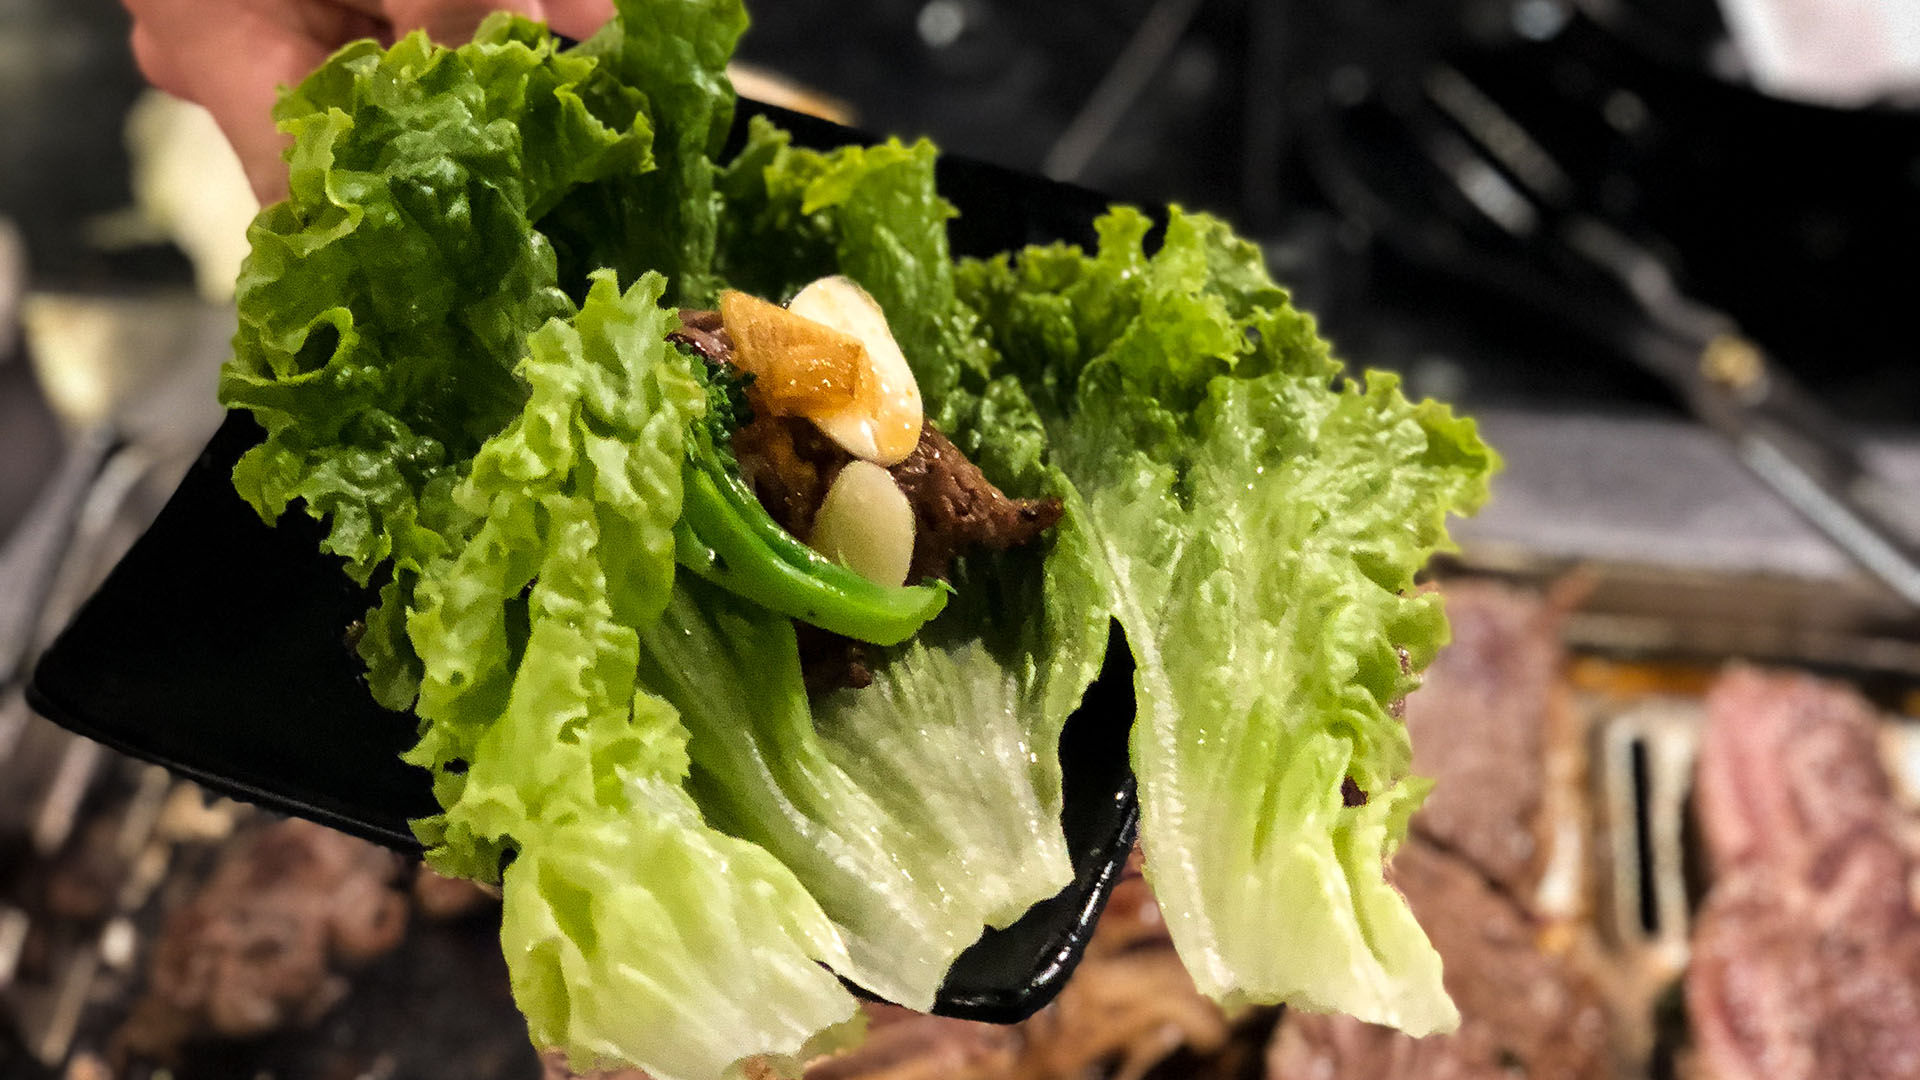 Lettuce wrap with bulgogi and garlic.